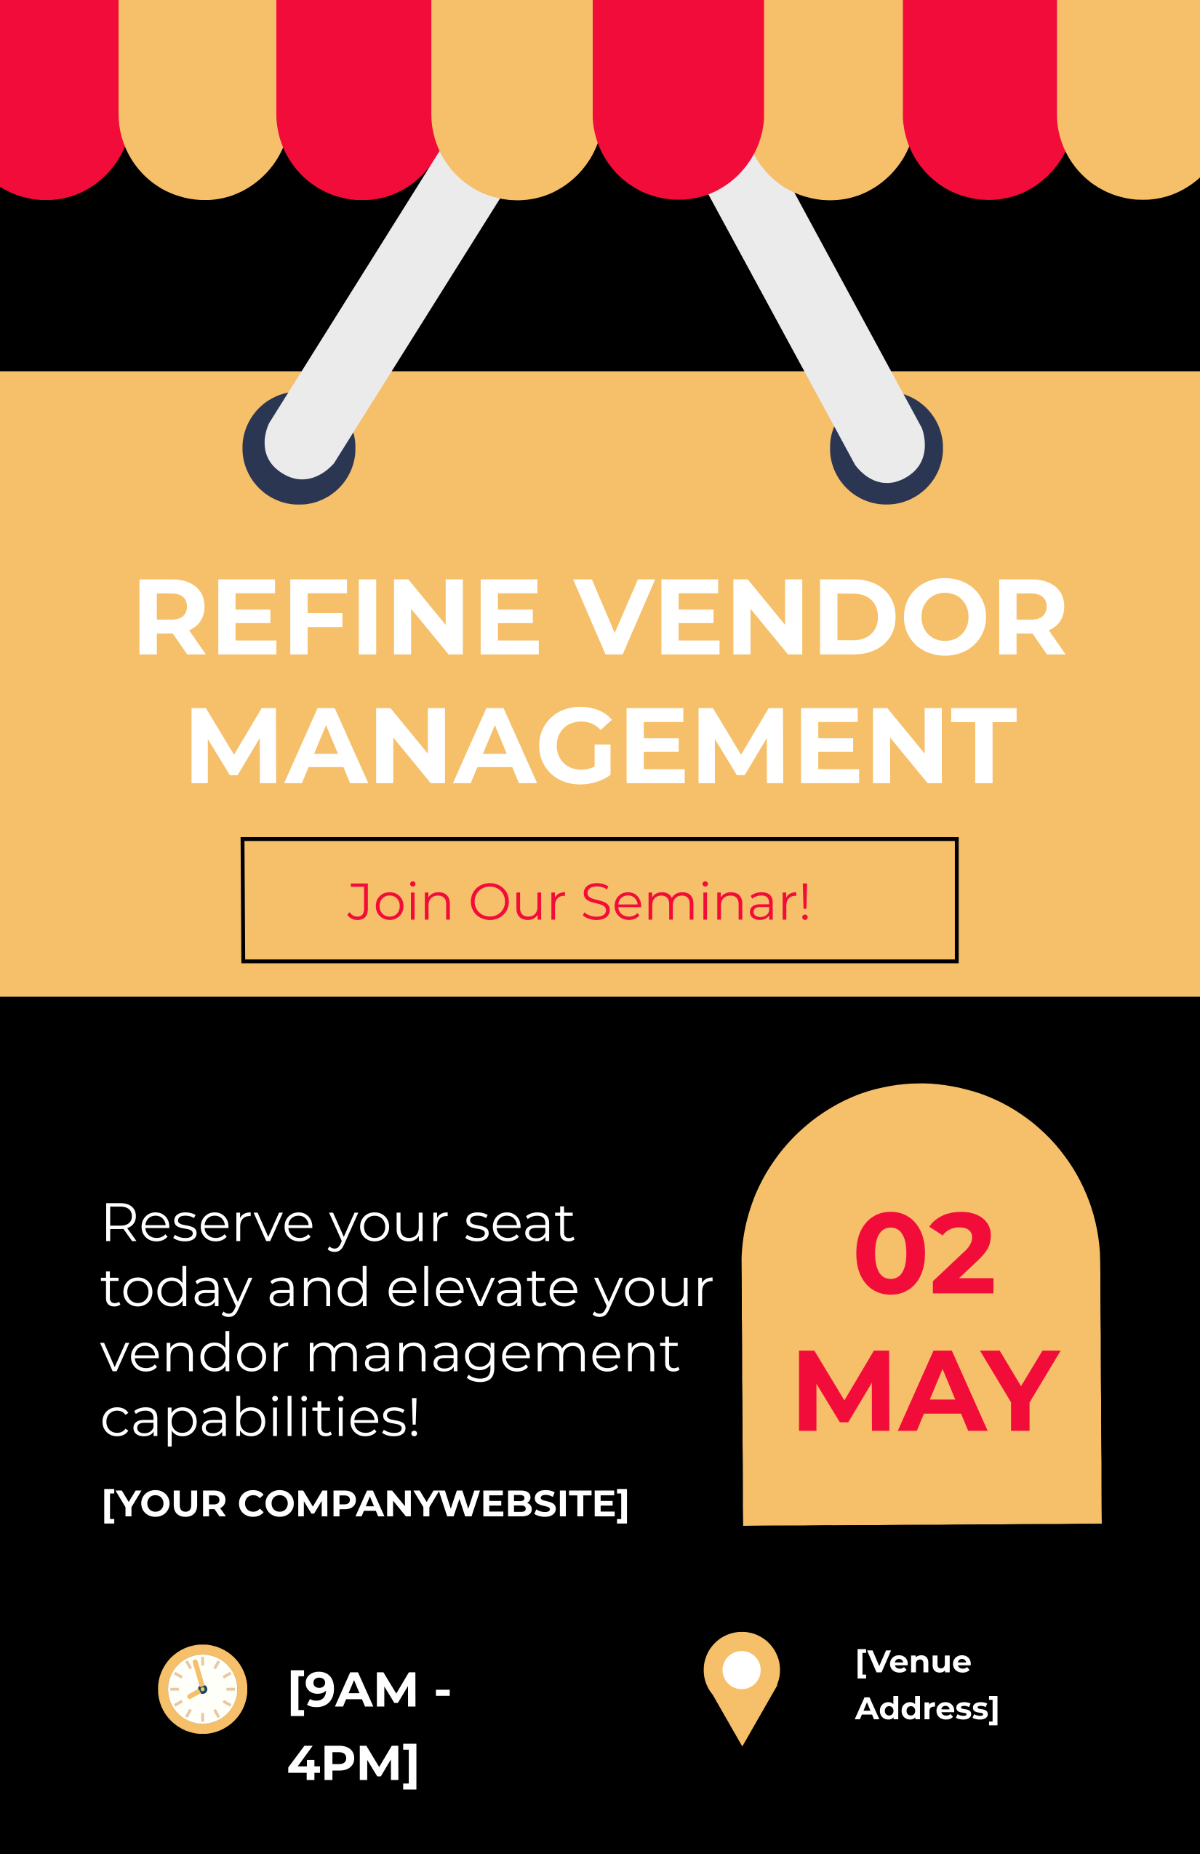 Vendor Management Best Practices Seminar Poster Template